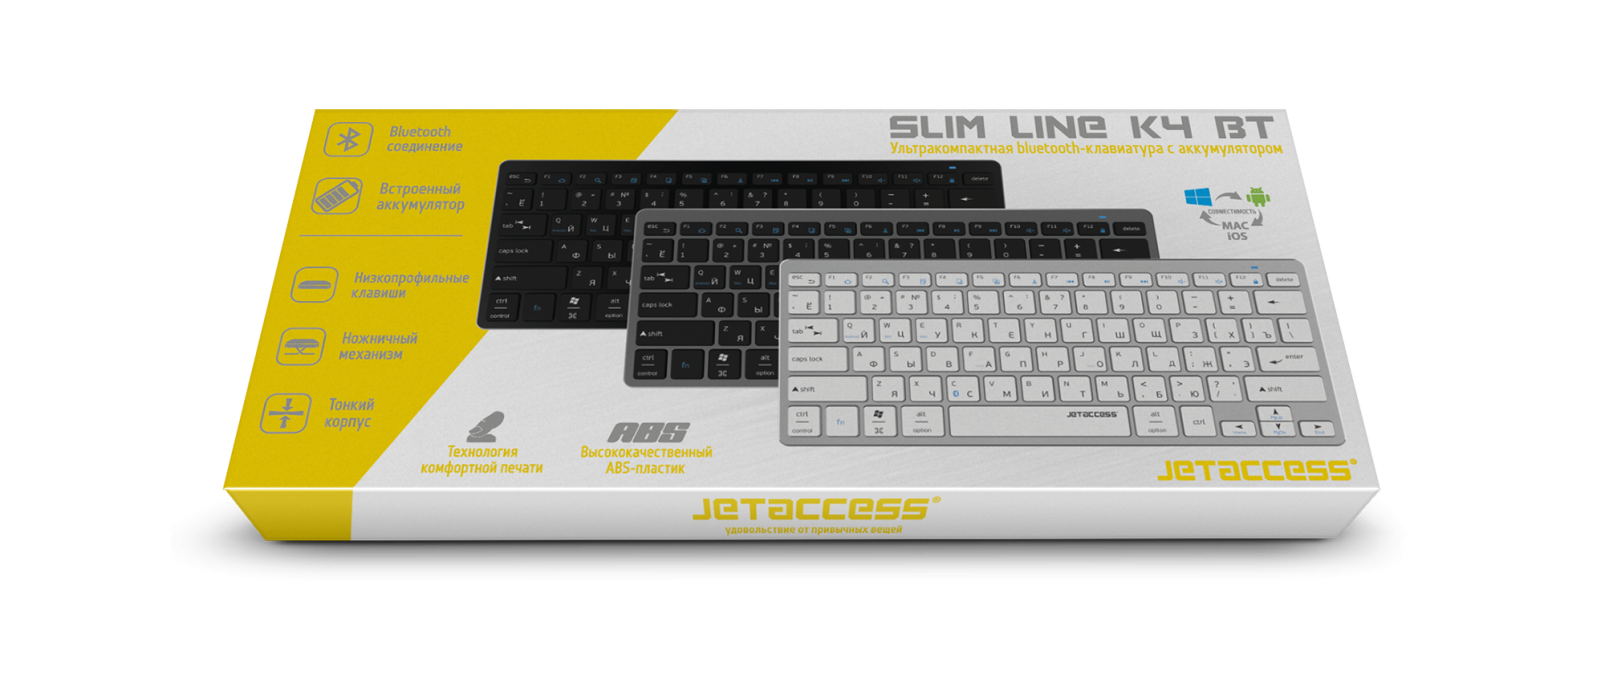 Ультракомпактная bluetooth-клавиатура с аккумулятором SLIM LINE K4 BT5